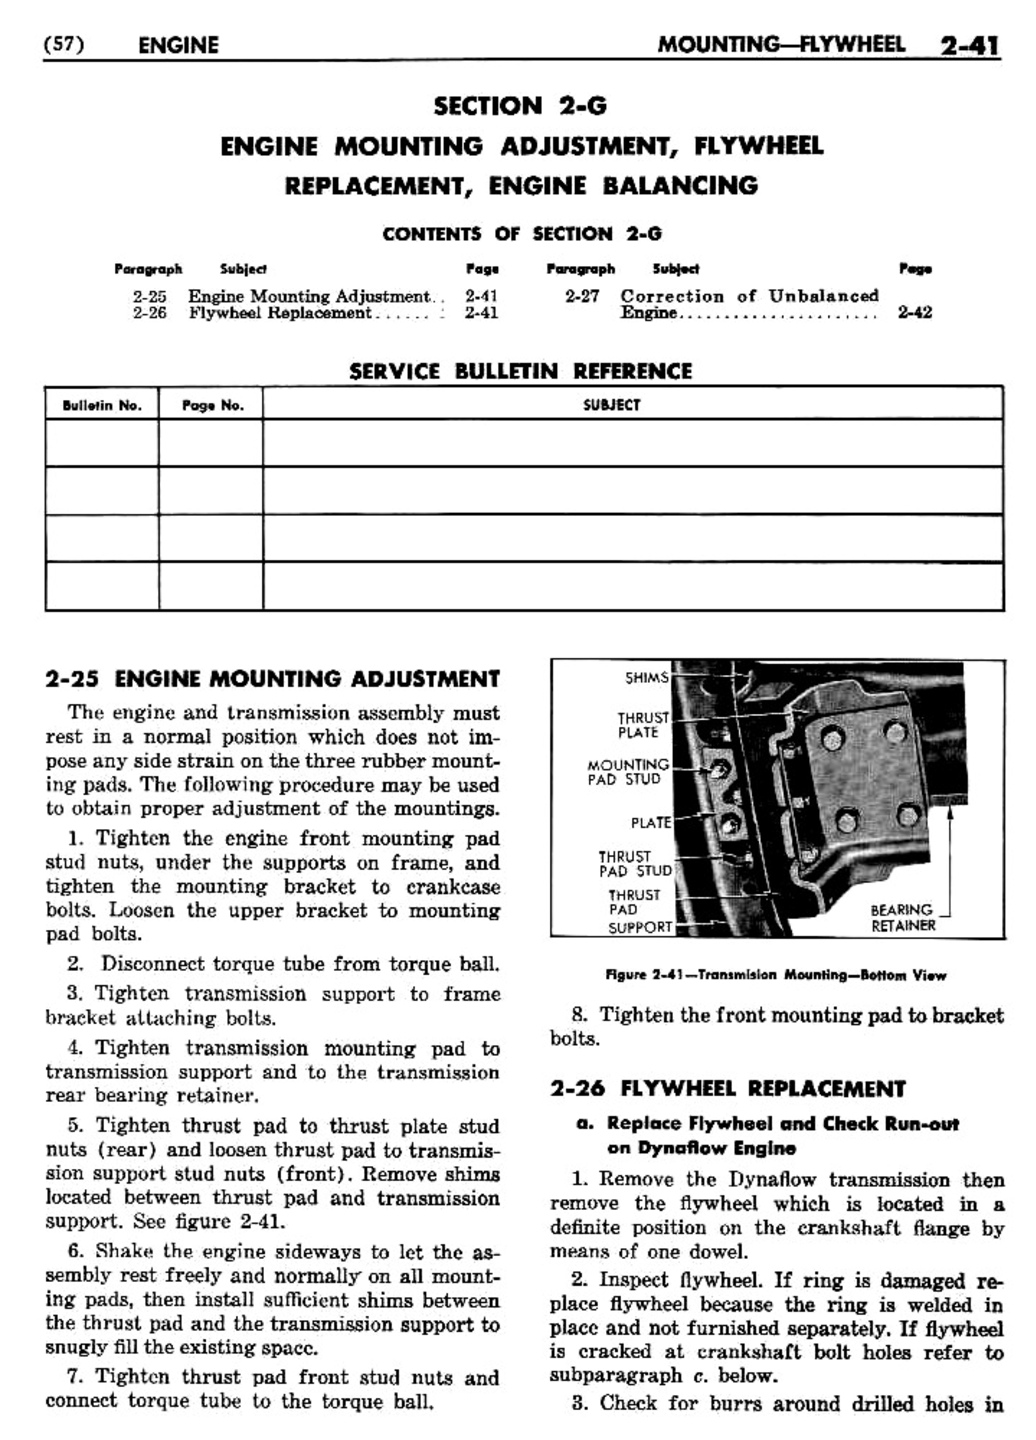 n_03 1955 Buick Shop Manual - Engine-041-041.jpg